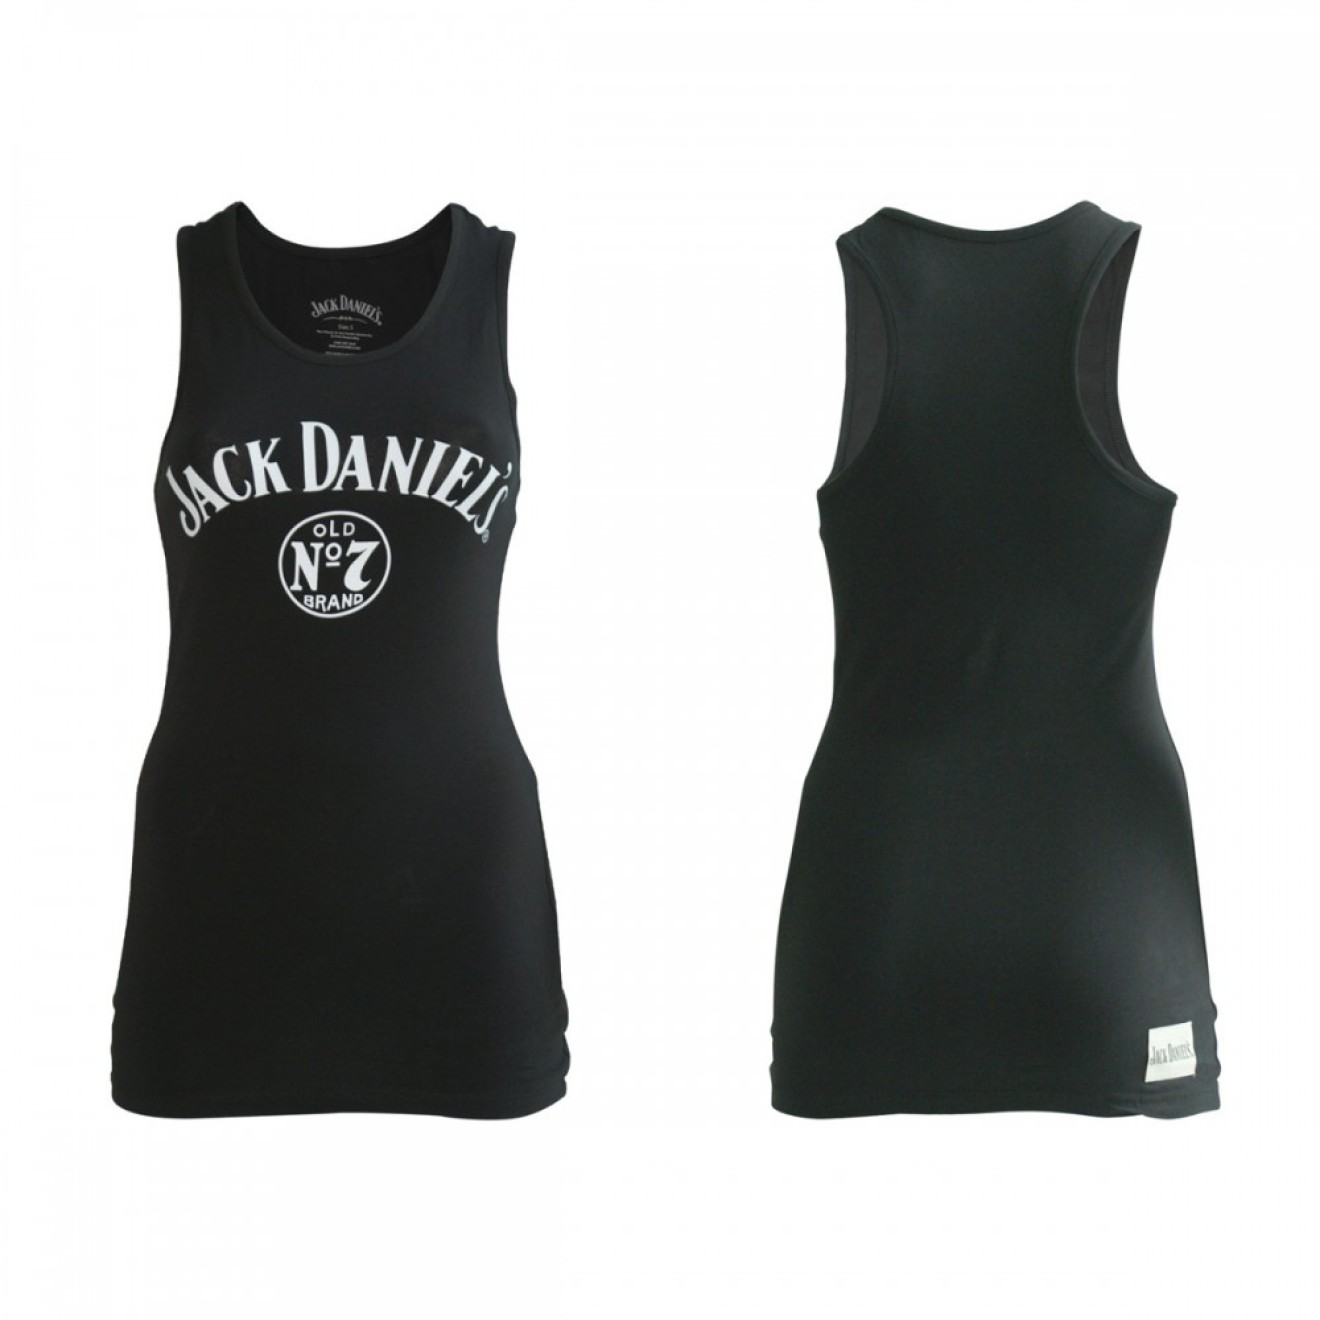 Jack Daniels Black, Female No 7 Tanktop